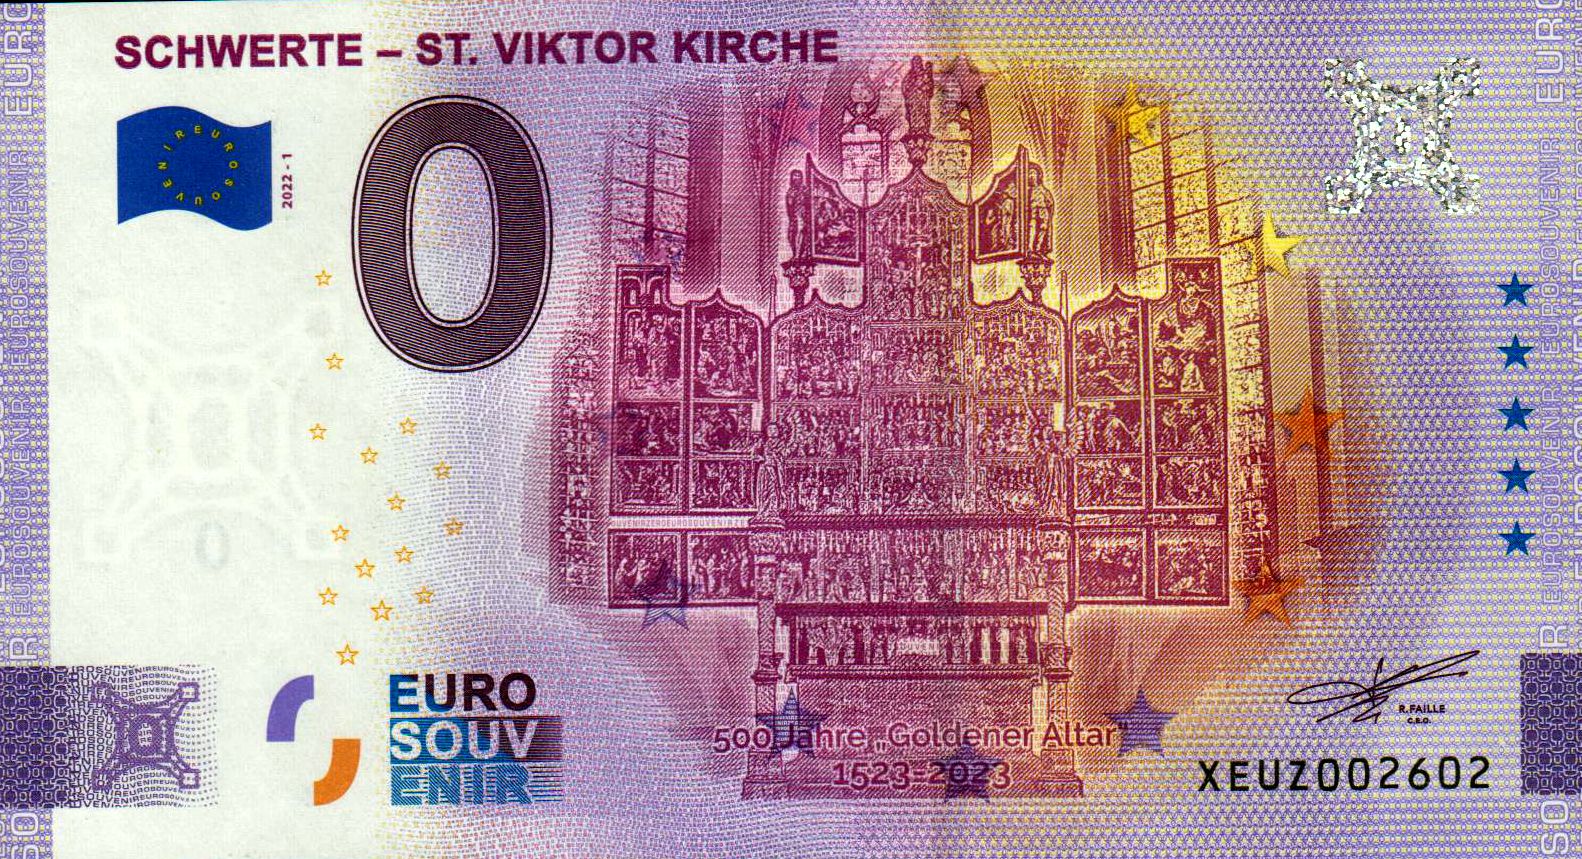 Schwerte - St. Viktor Kirche 2022-1 Anniversary